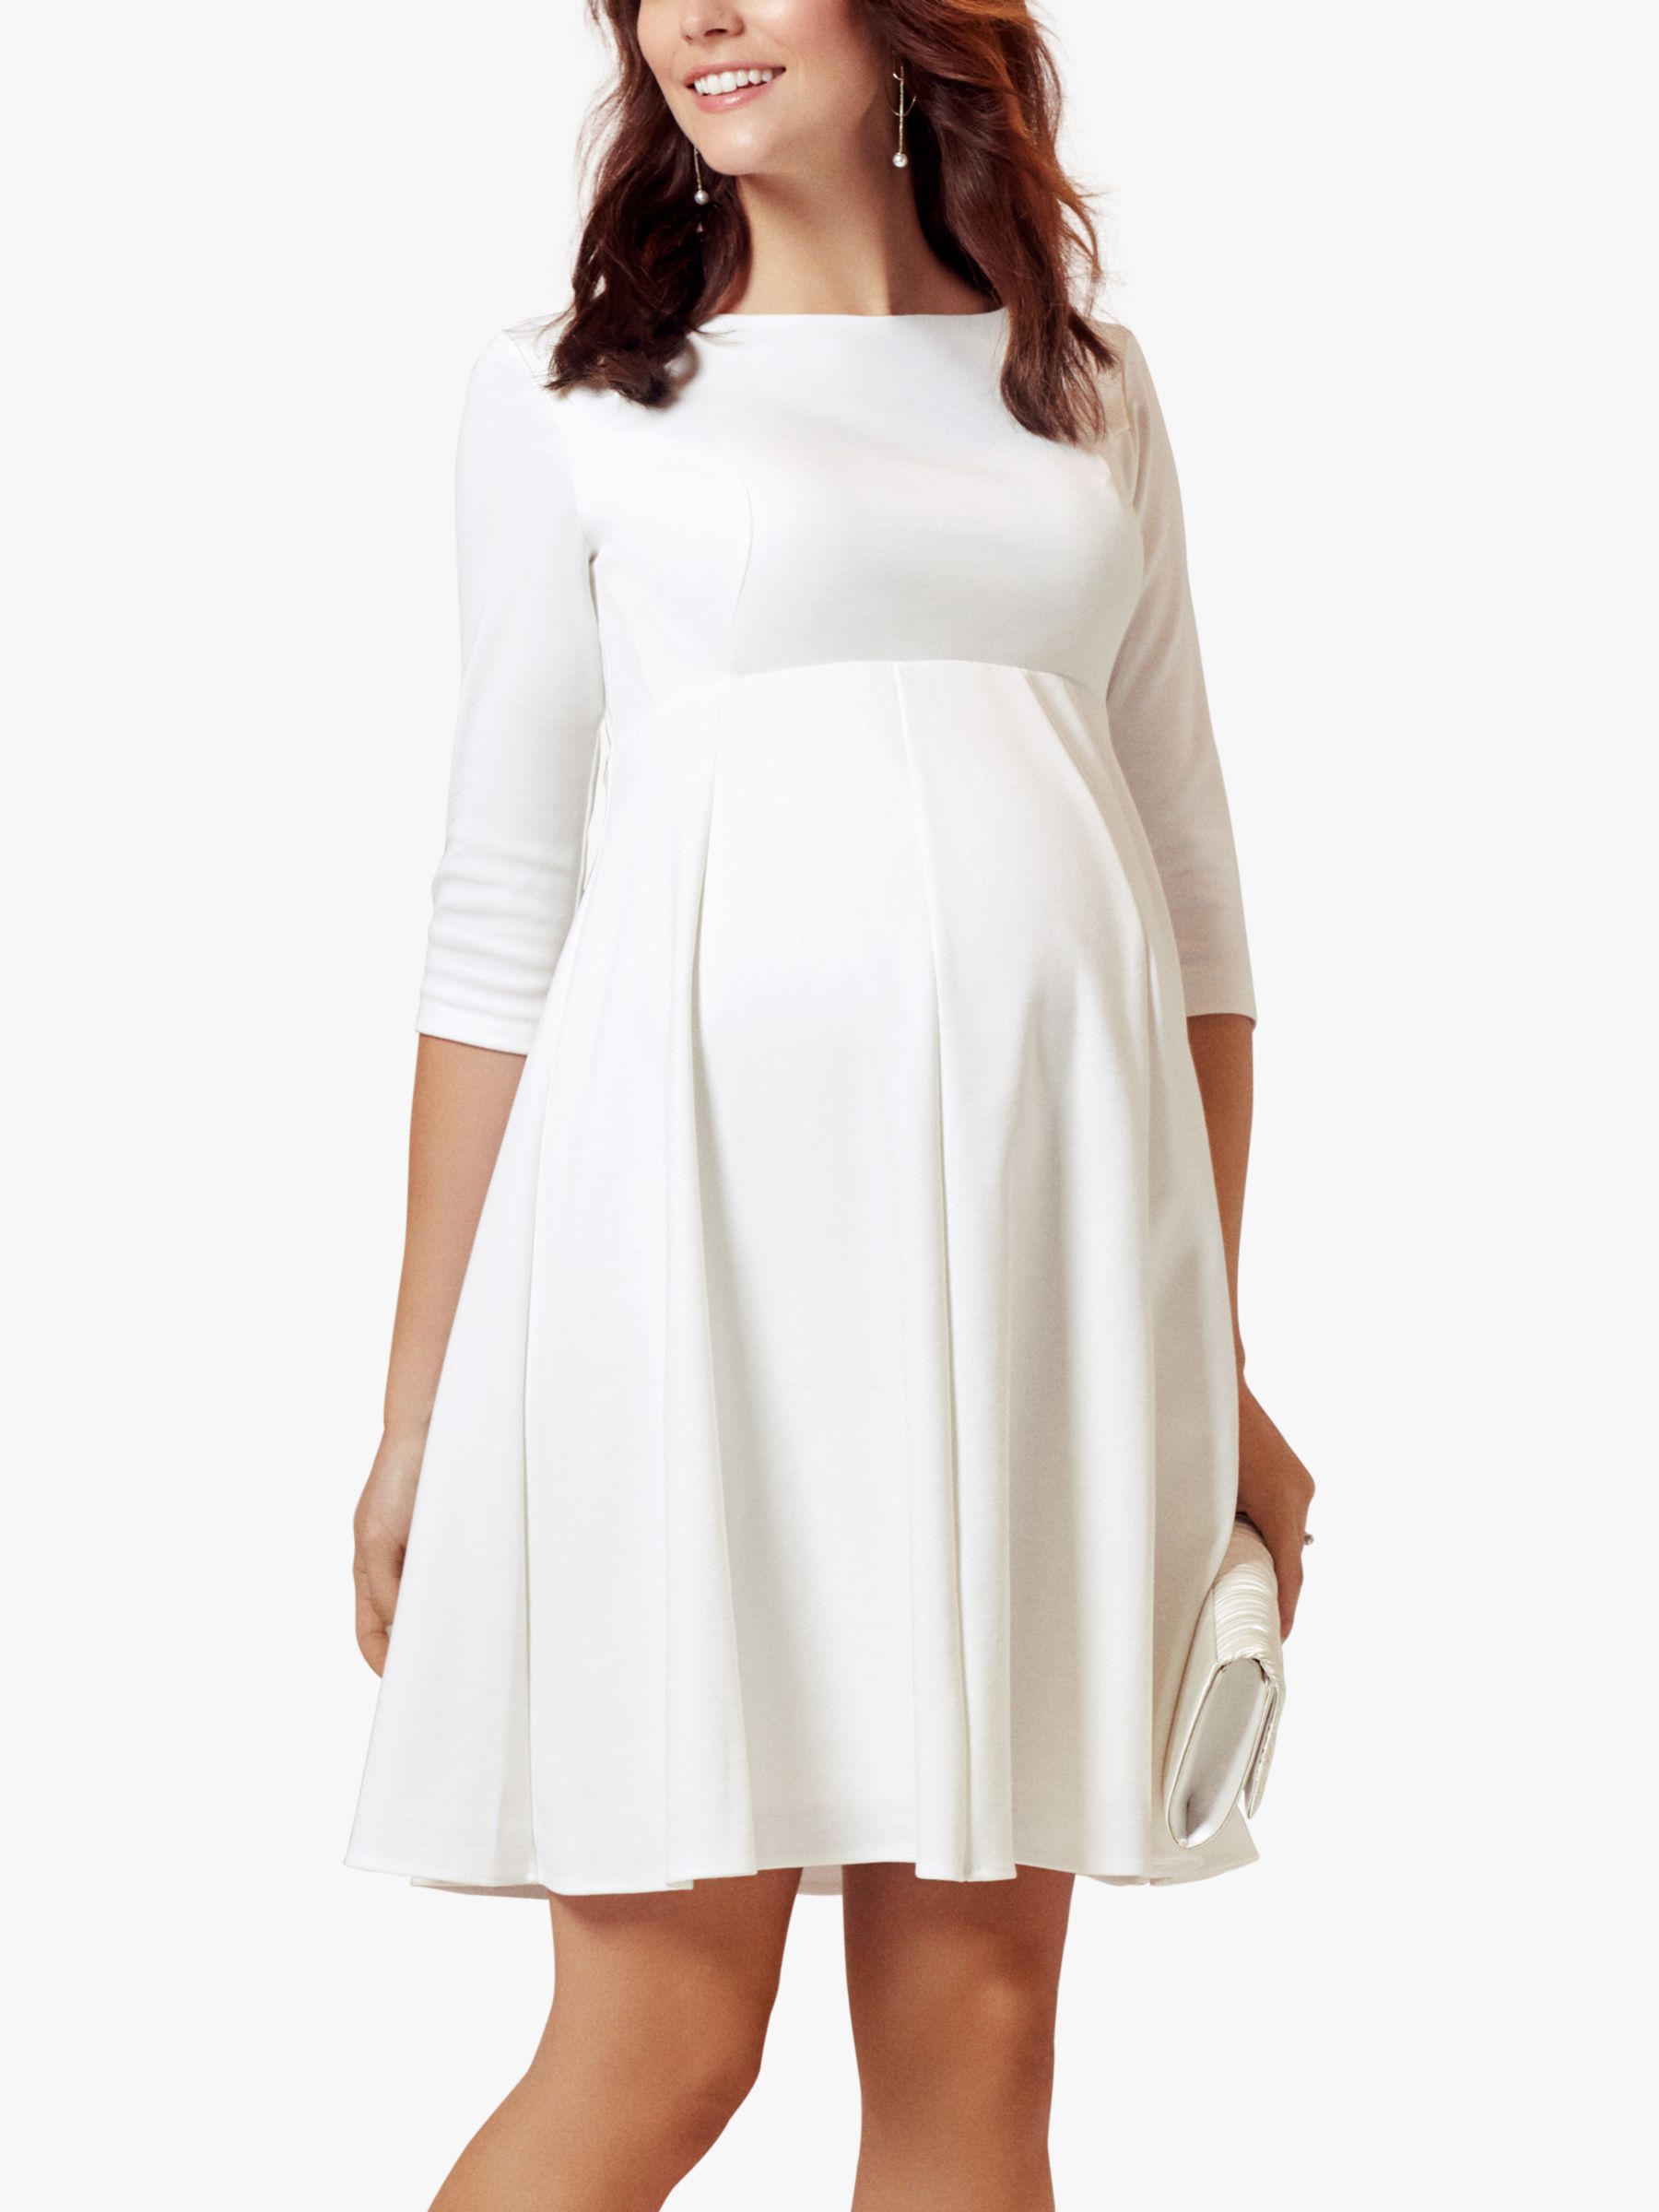 Tiffany Rose Sienna Maternity Dress, Cream, 6-8